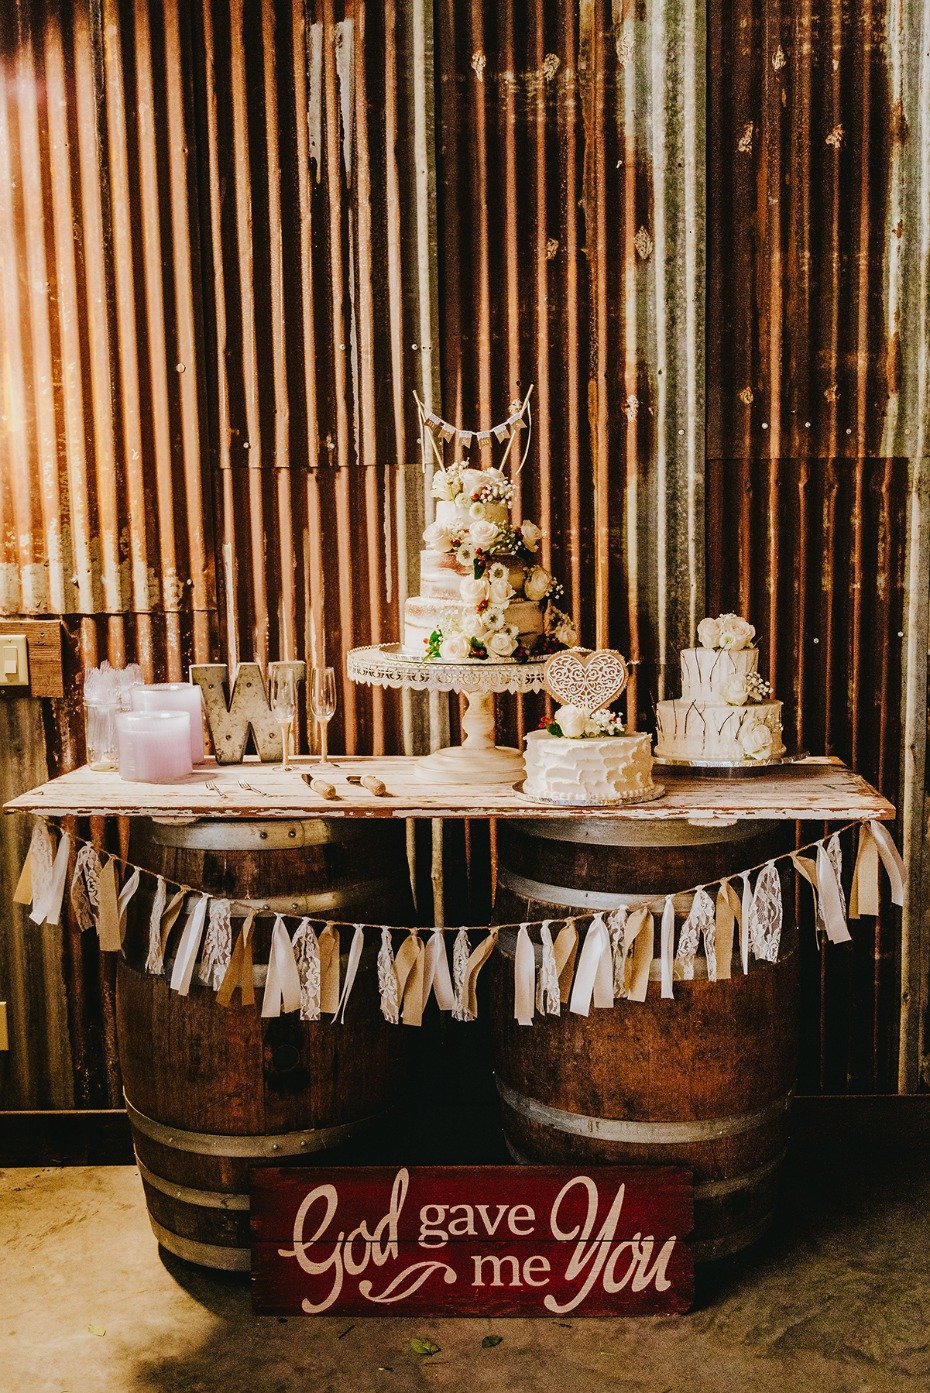 Wedding cake spread